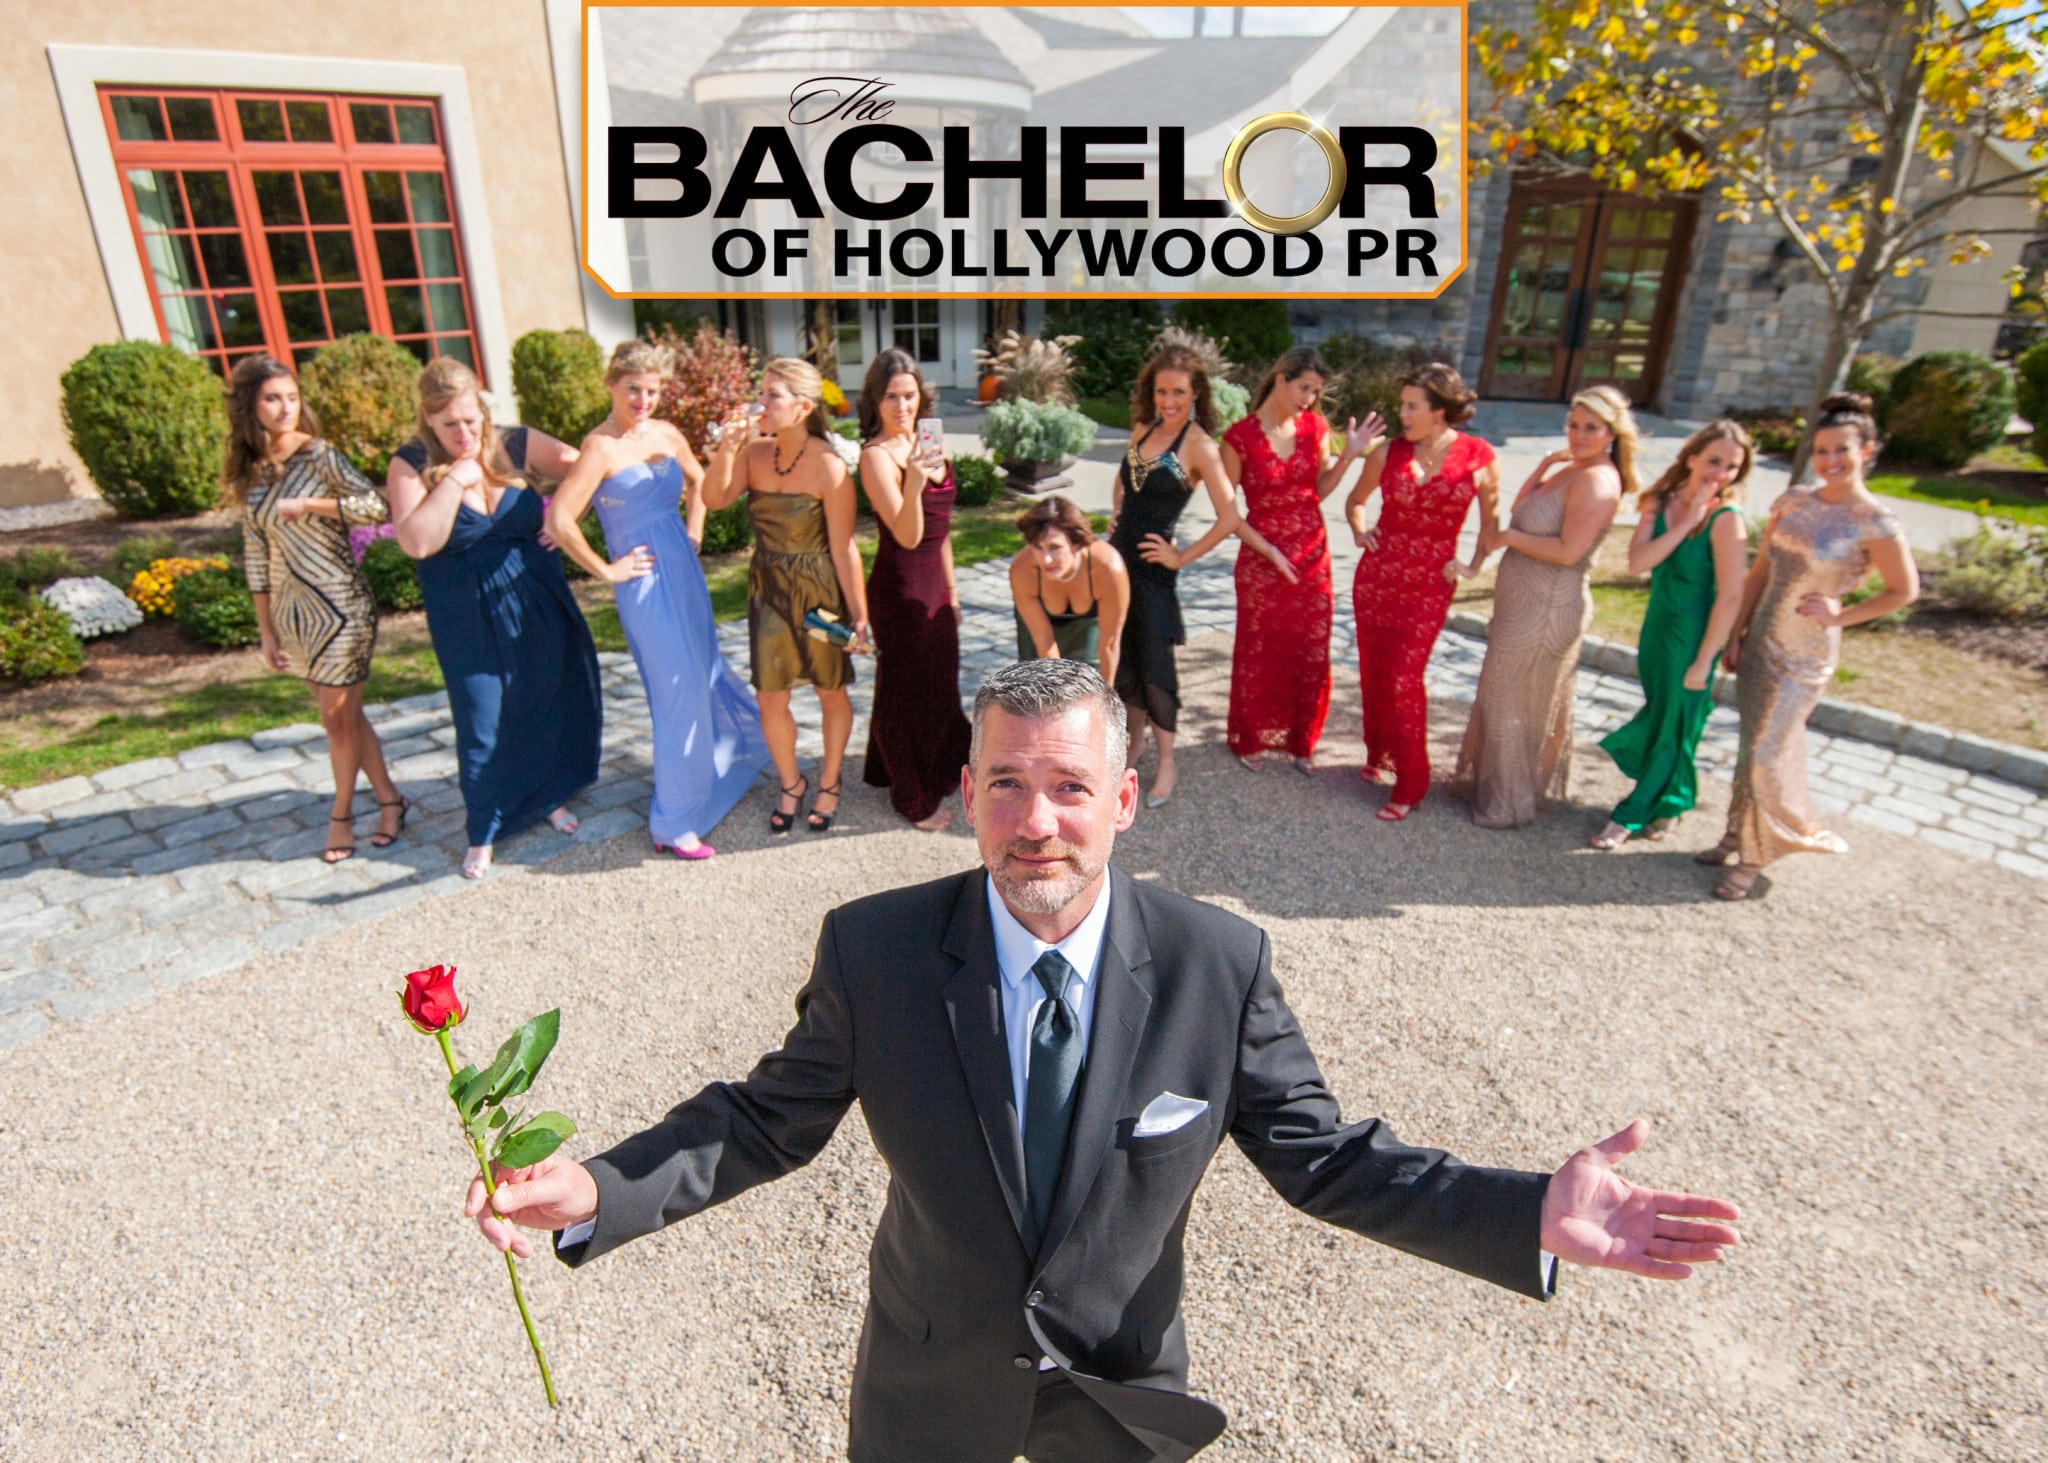 The Bachelor of Hollywood PR